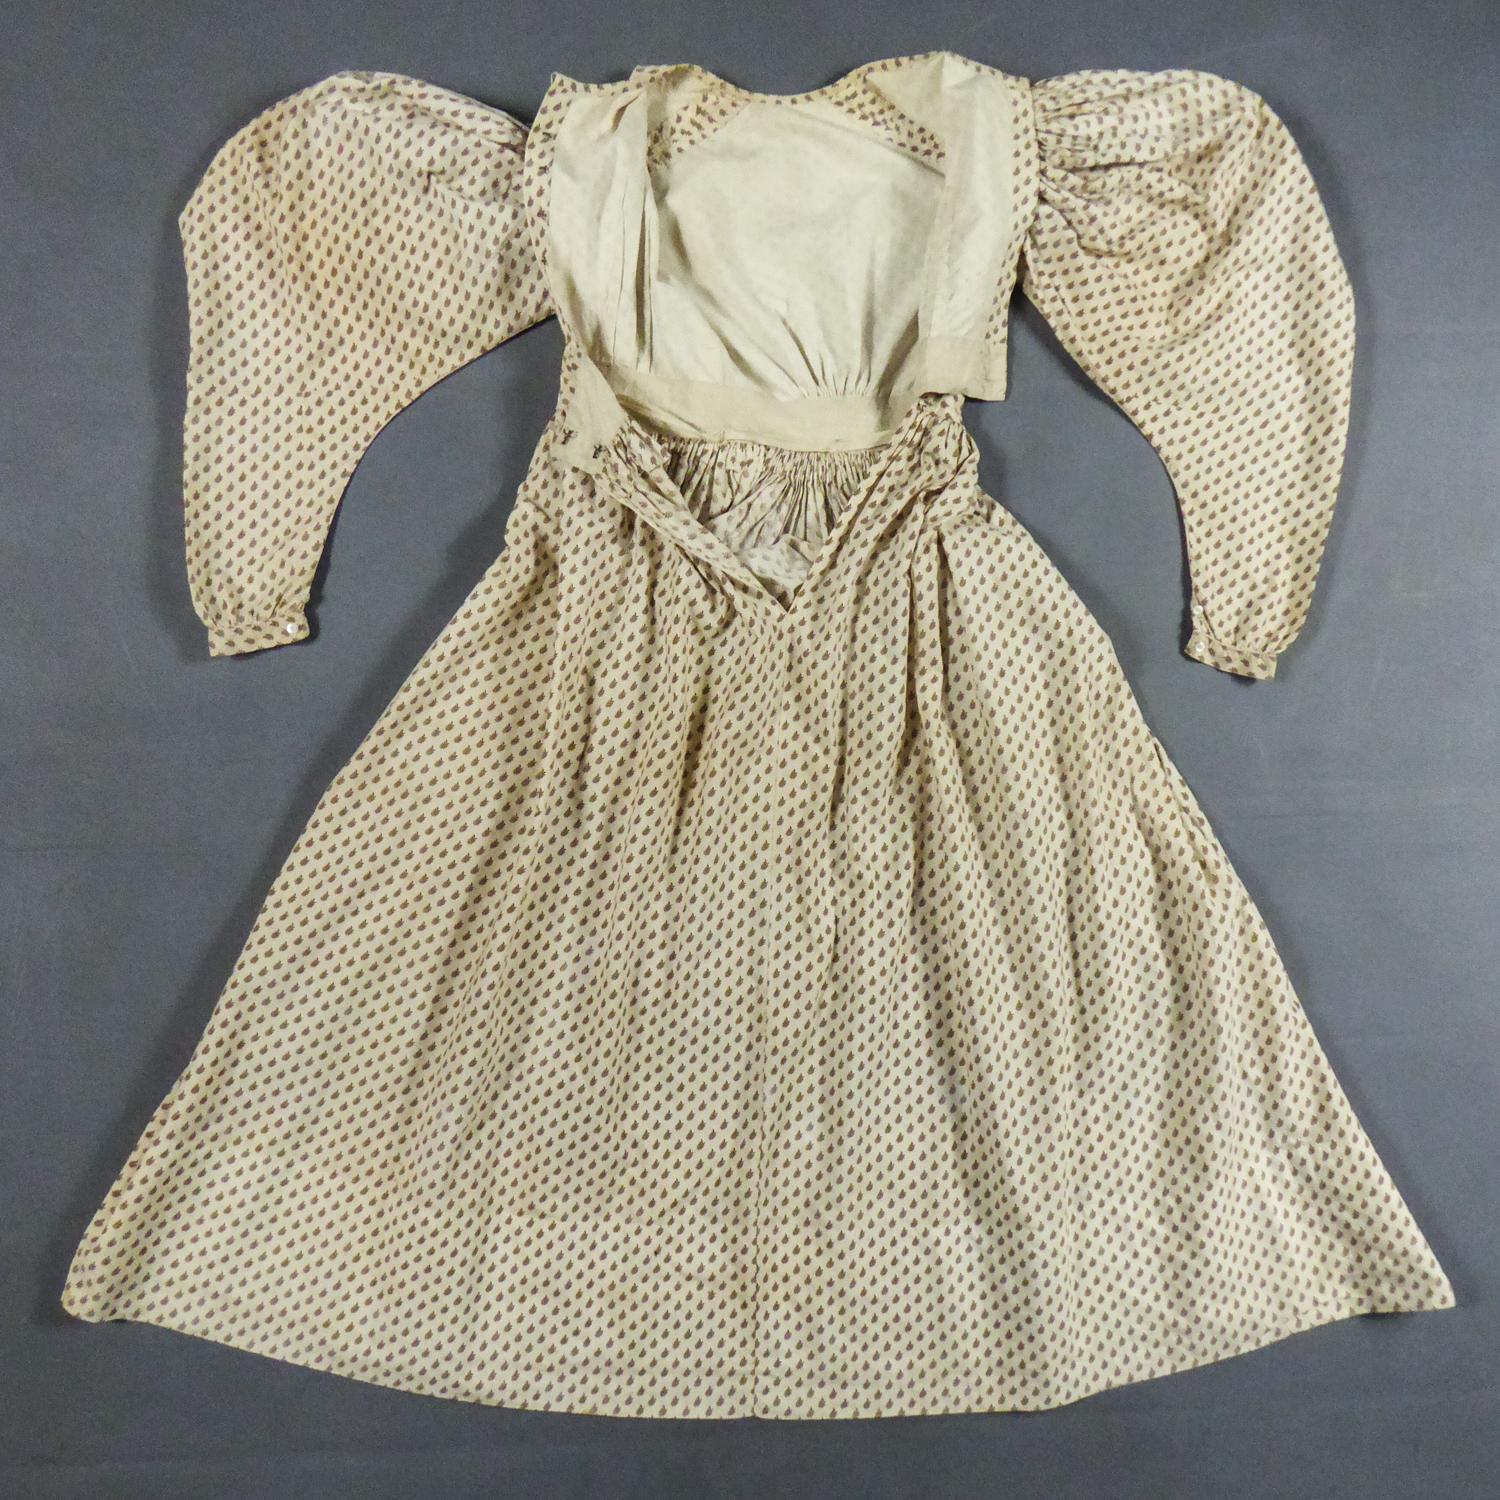 1830s day dress